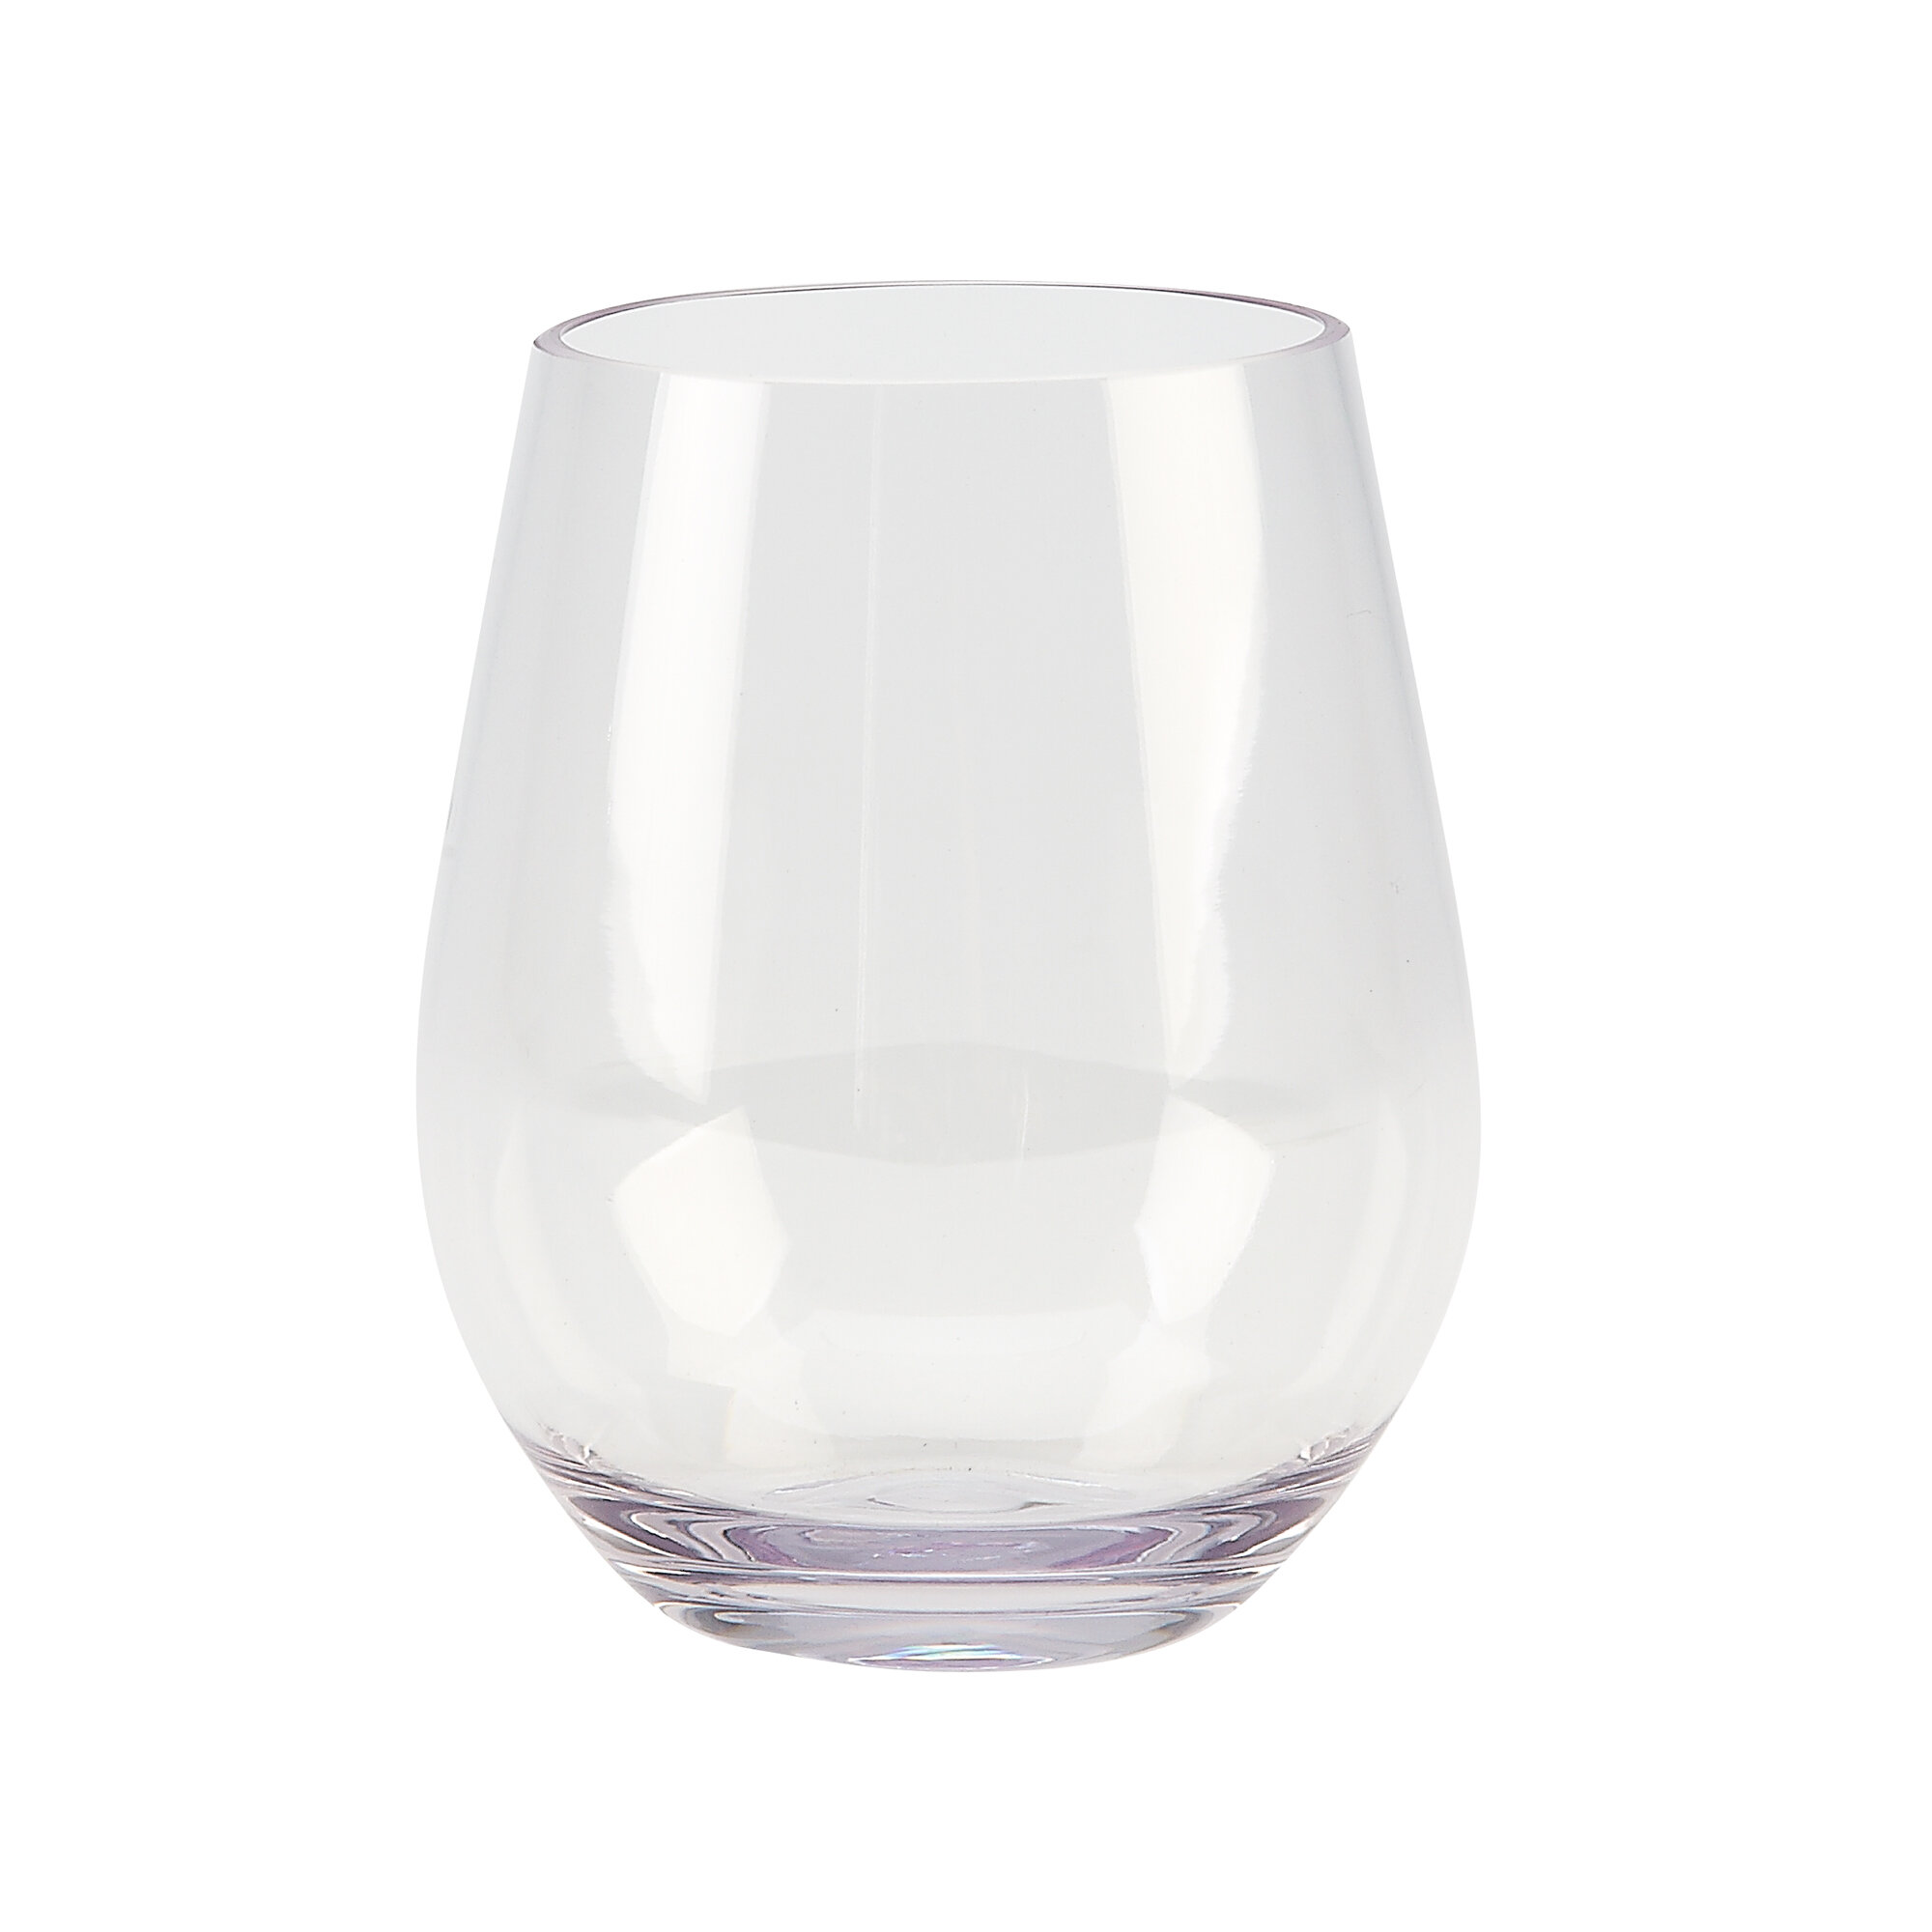 Elle Decor Acrylic Wine Goblets, Set of 4, 15-ounce, Unbreakable Acrylic Wine Glasses, Shatterproof Long Stemmed Glasses, Bar Drinking Cups, Green